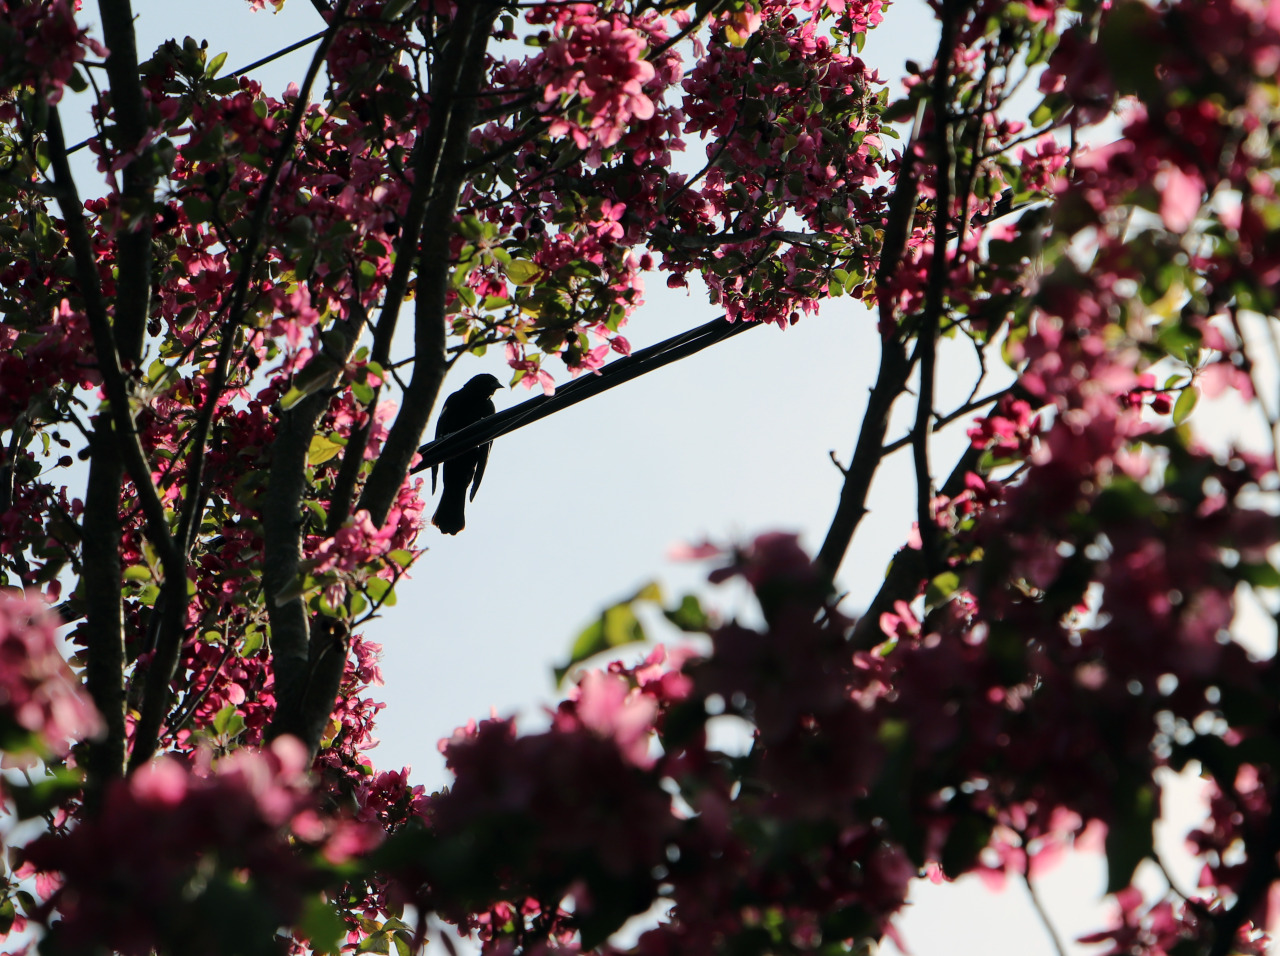 #bird#spring#nature#pink#tree#trees#crabapple tree#sky#michigan